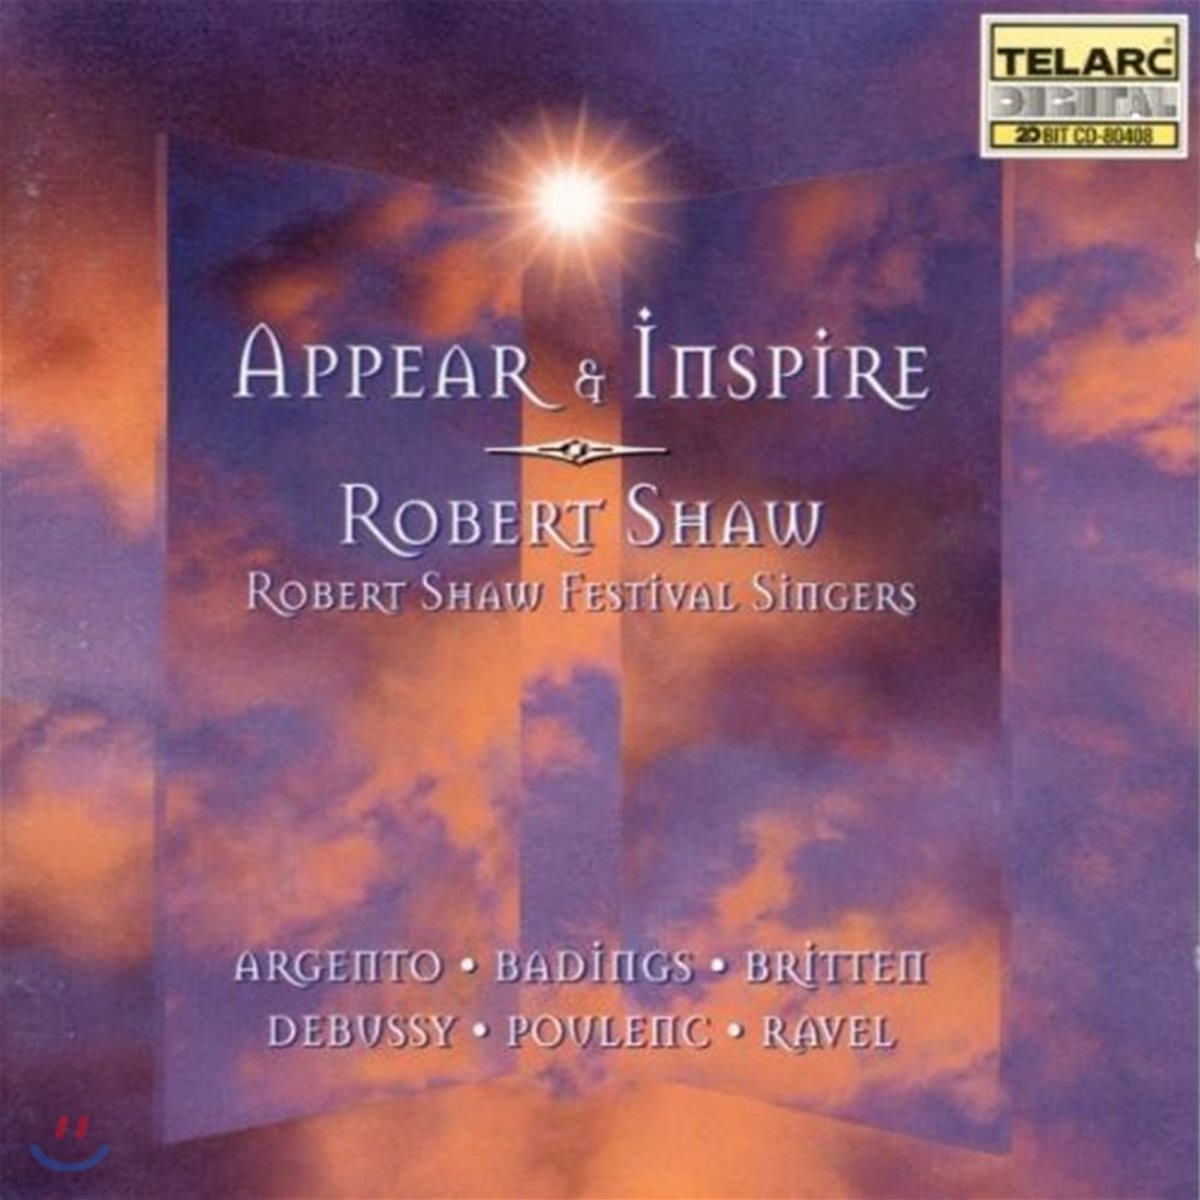 Robert Shaw Festival Singers 영감을 주다 - 브리튼 / 드뷔시 / 풀랑크 / 라벨 외 (Appear &amp; Inspire - Britten / Debussy / Poulenc / Ravel)